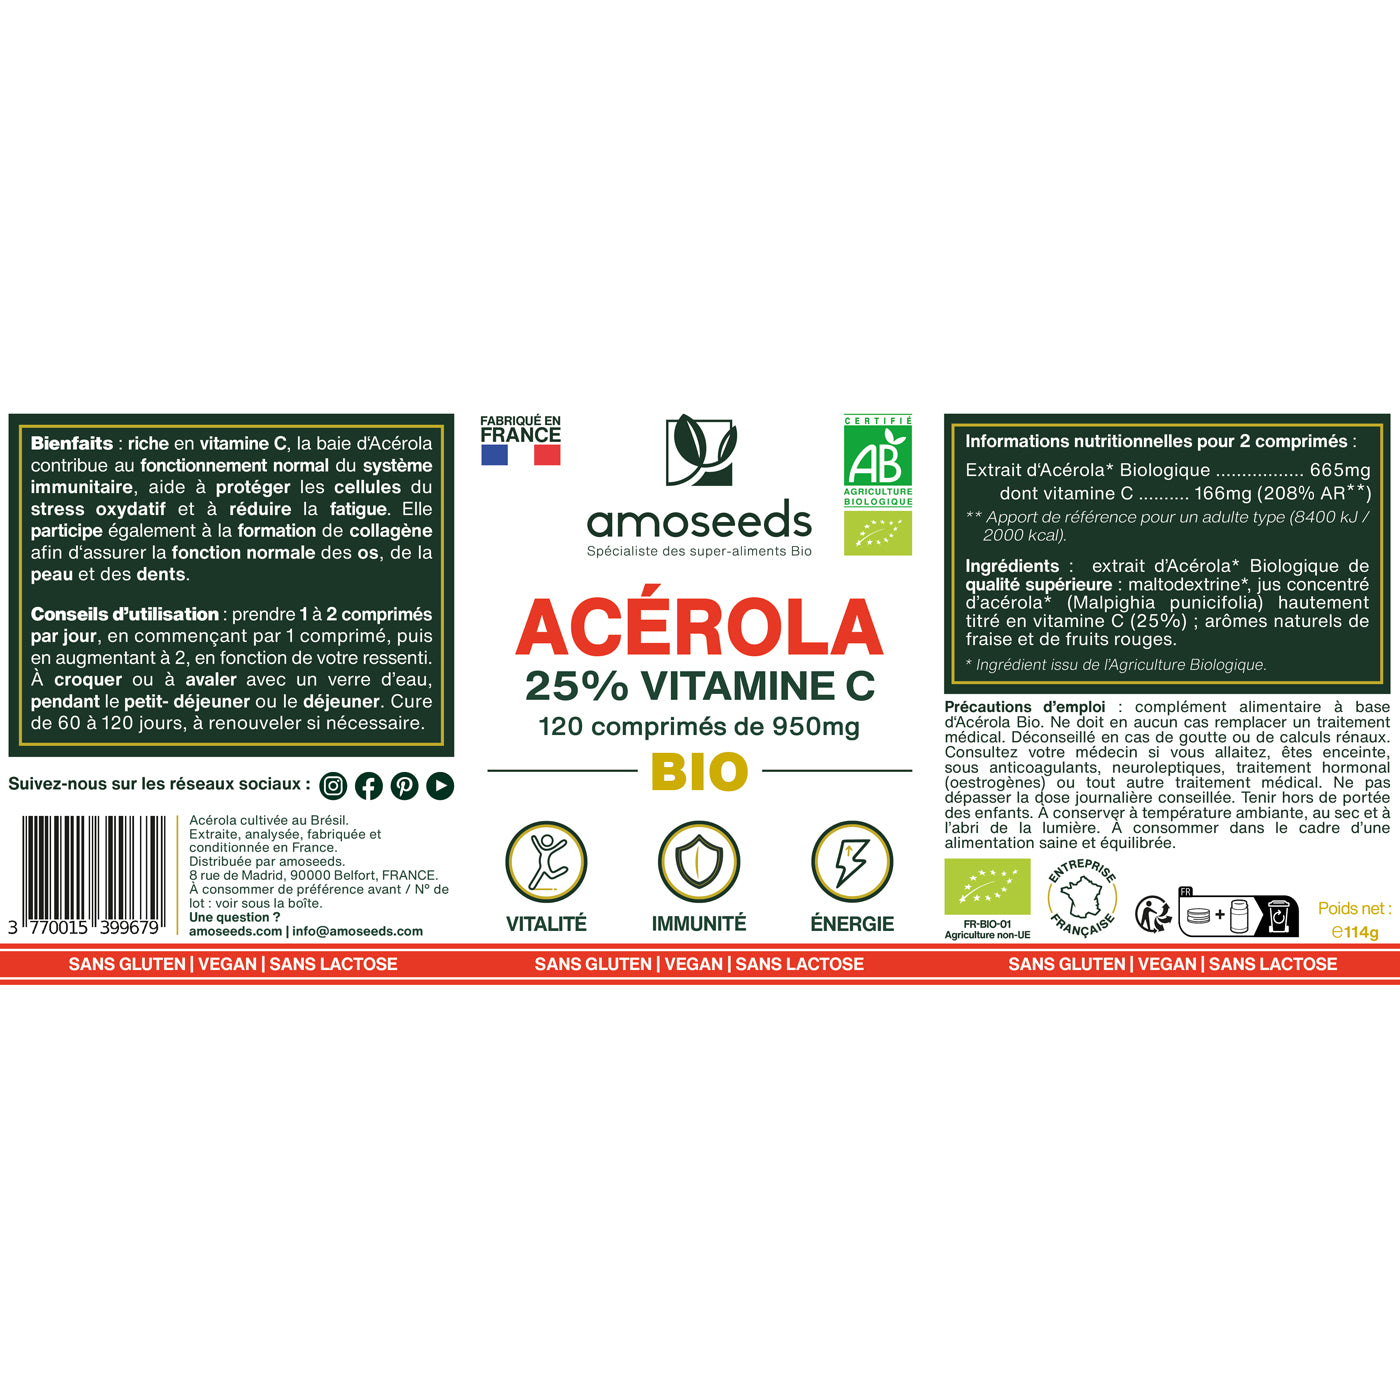 Acerola bio comprimes amoseeds specialiste des super aliments bio,